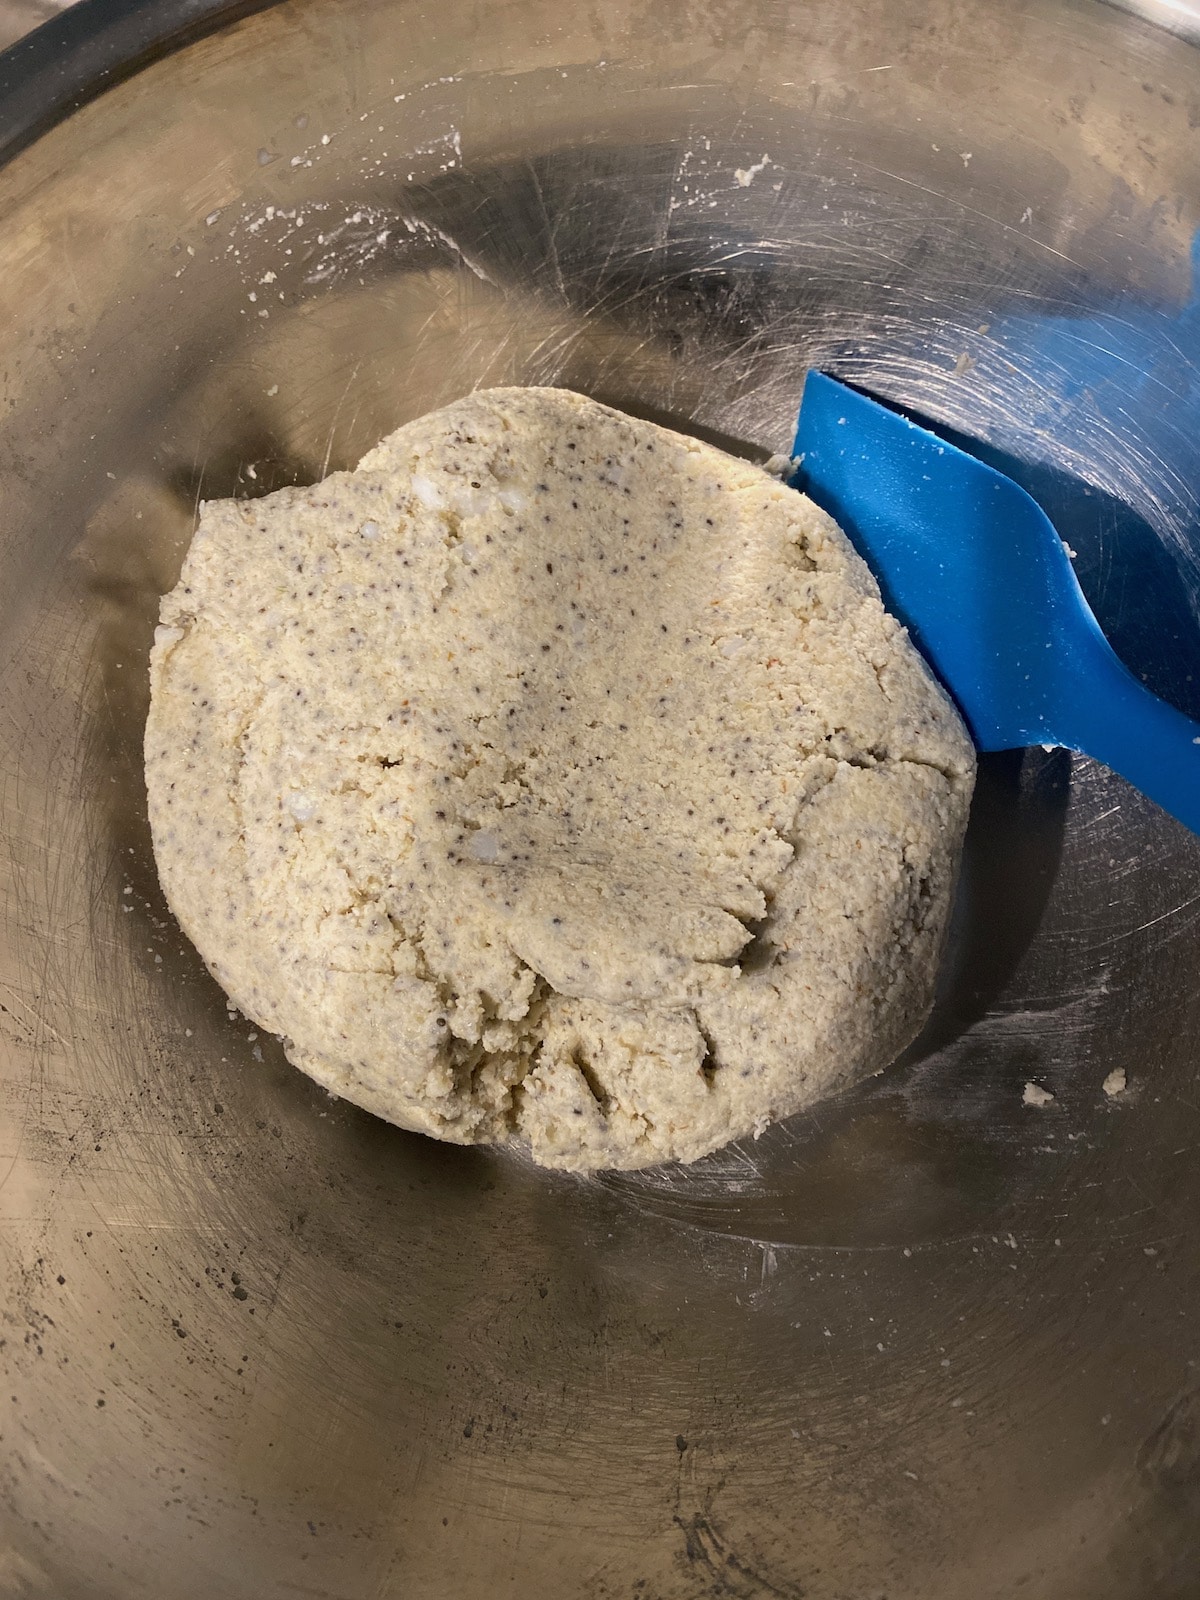 Homemade high fiber grain free bread dough in metal bowl with blue spatula